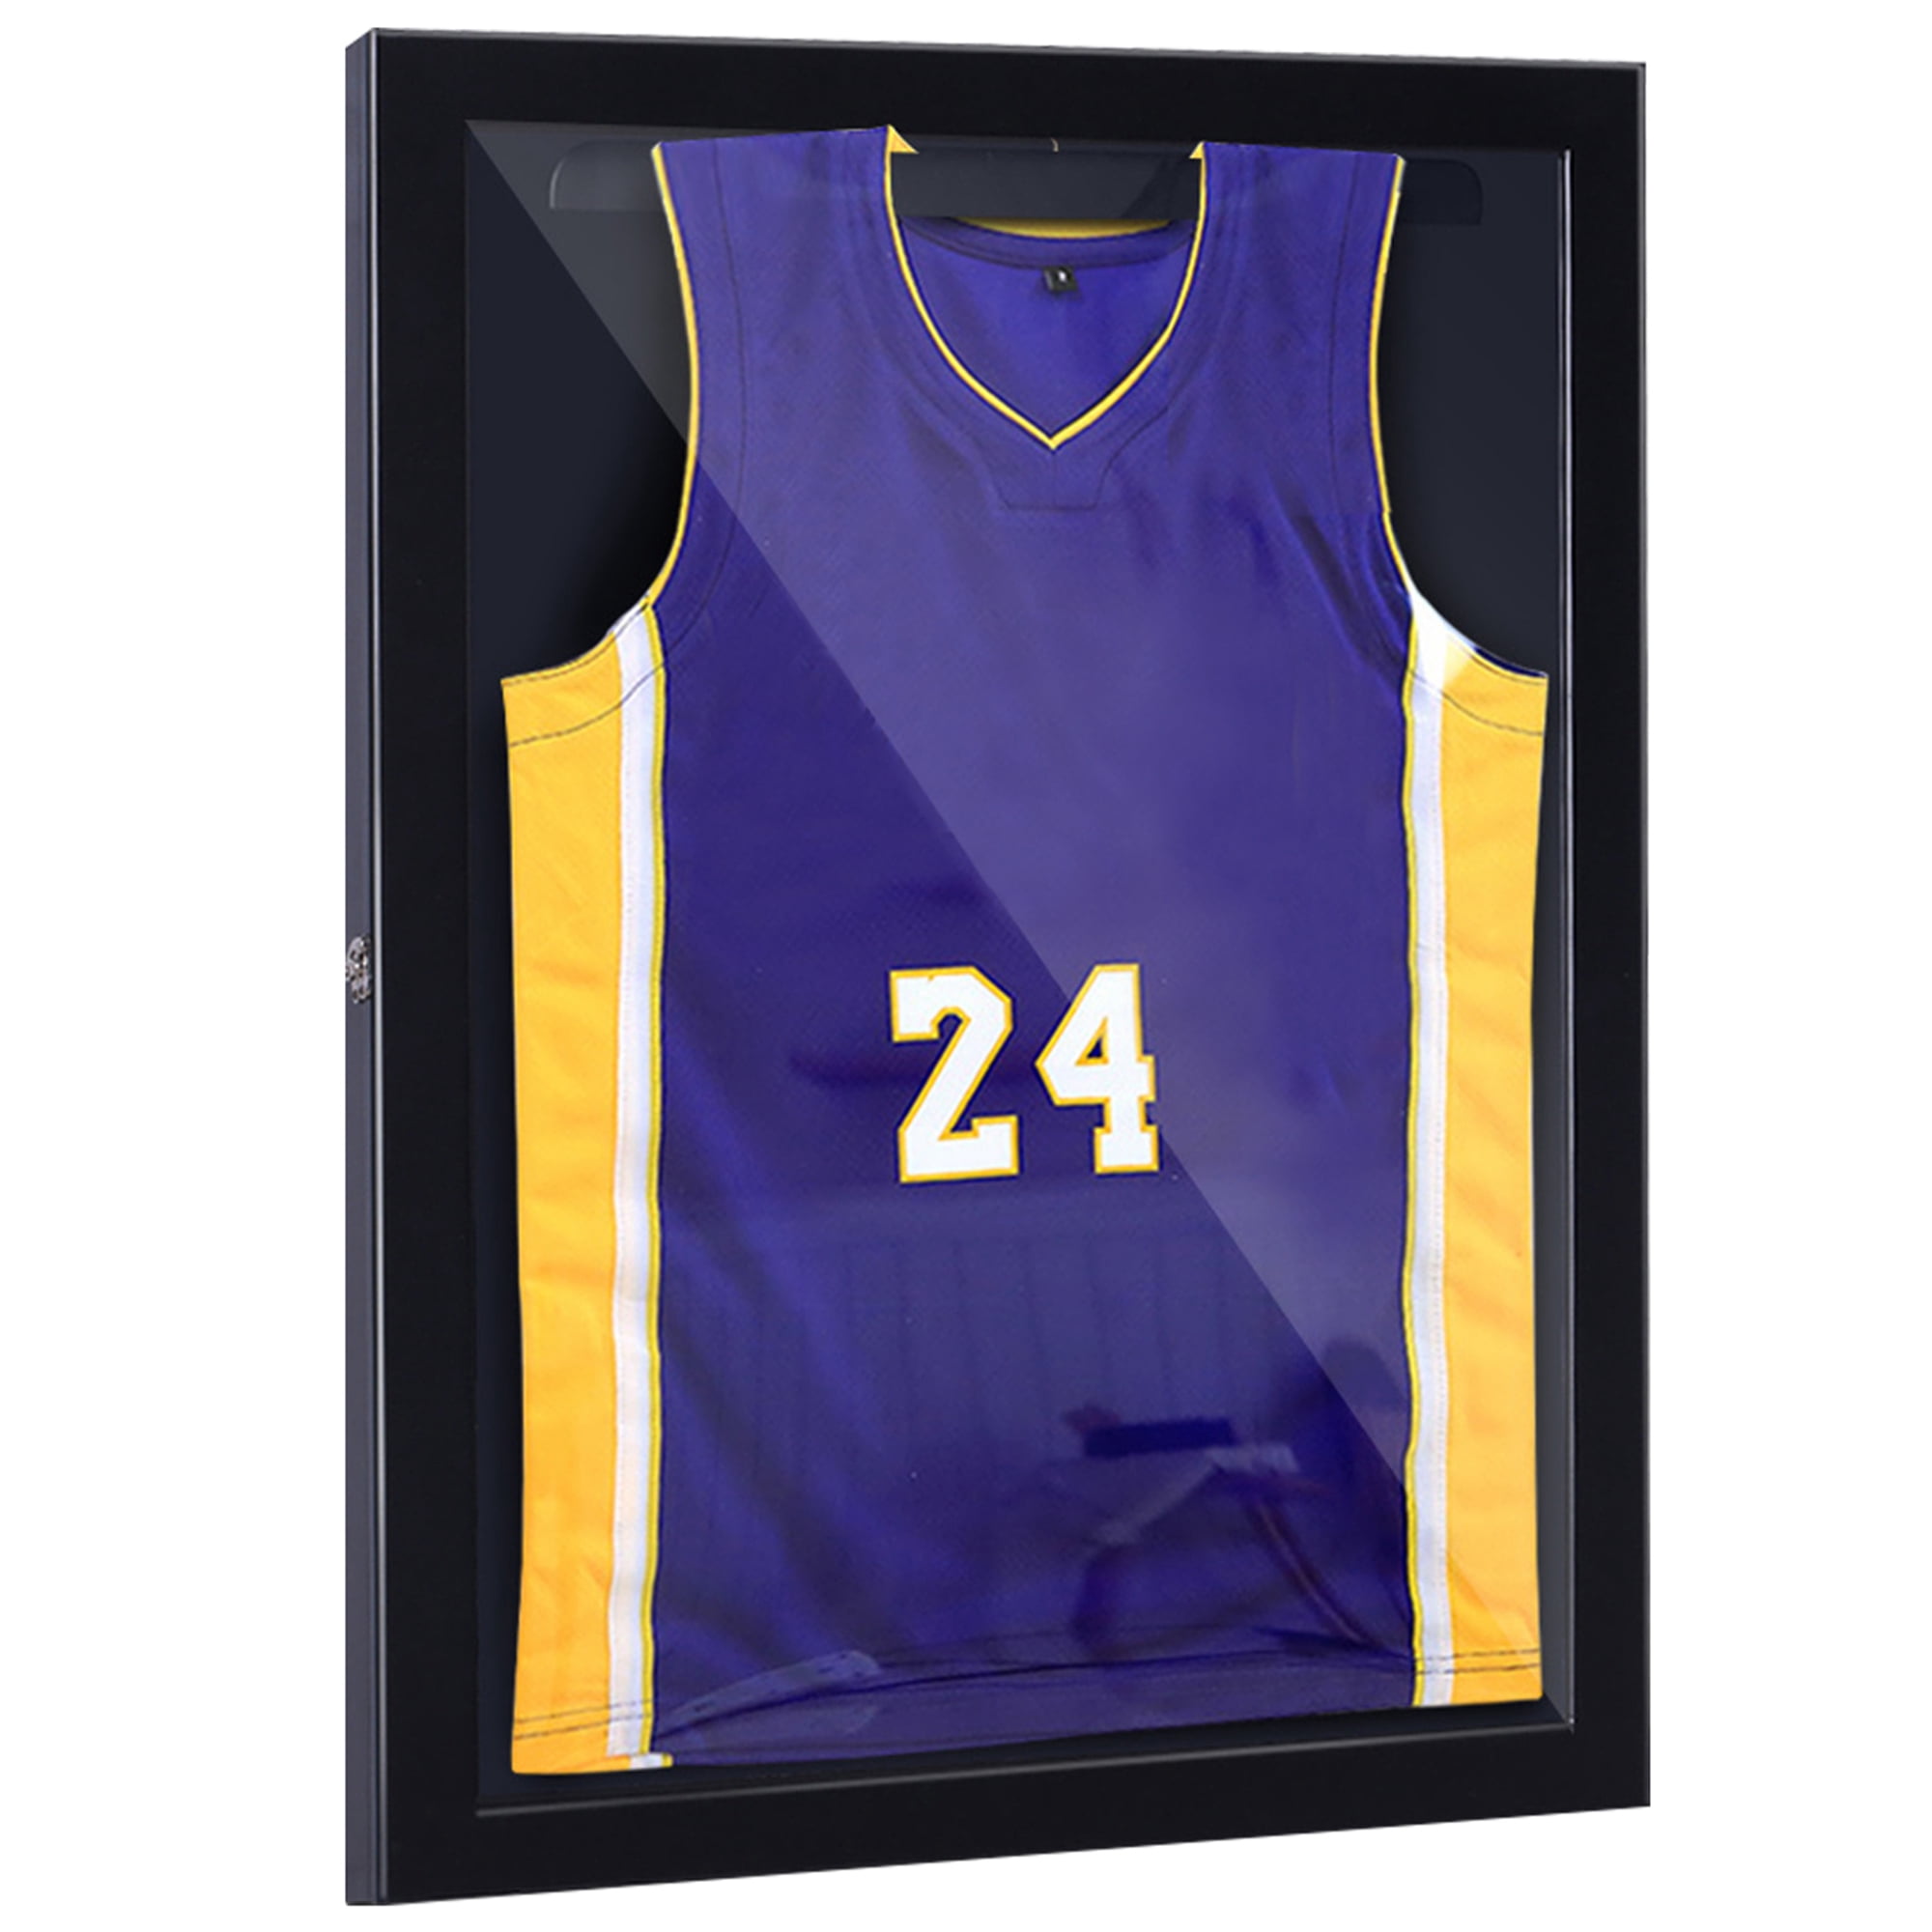 HOMCOM Jersey Frame Display Case Football Baseball Basketball